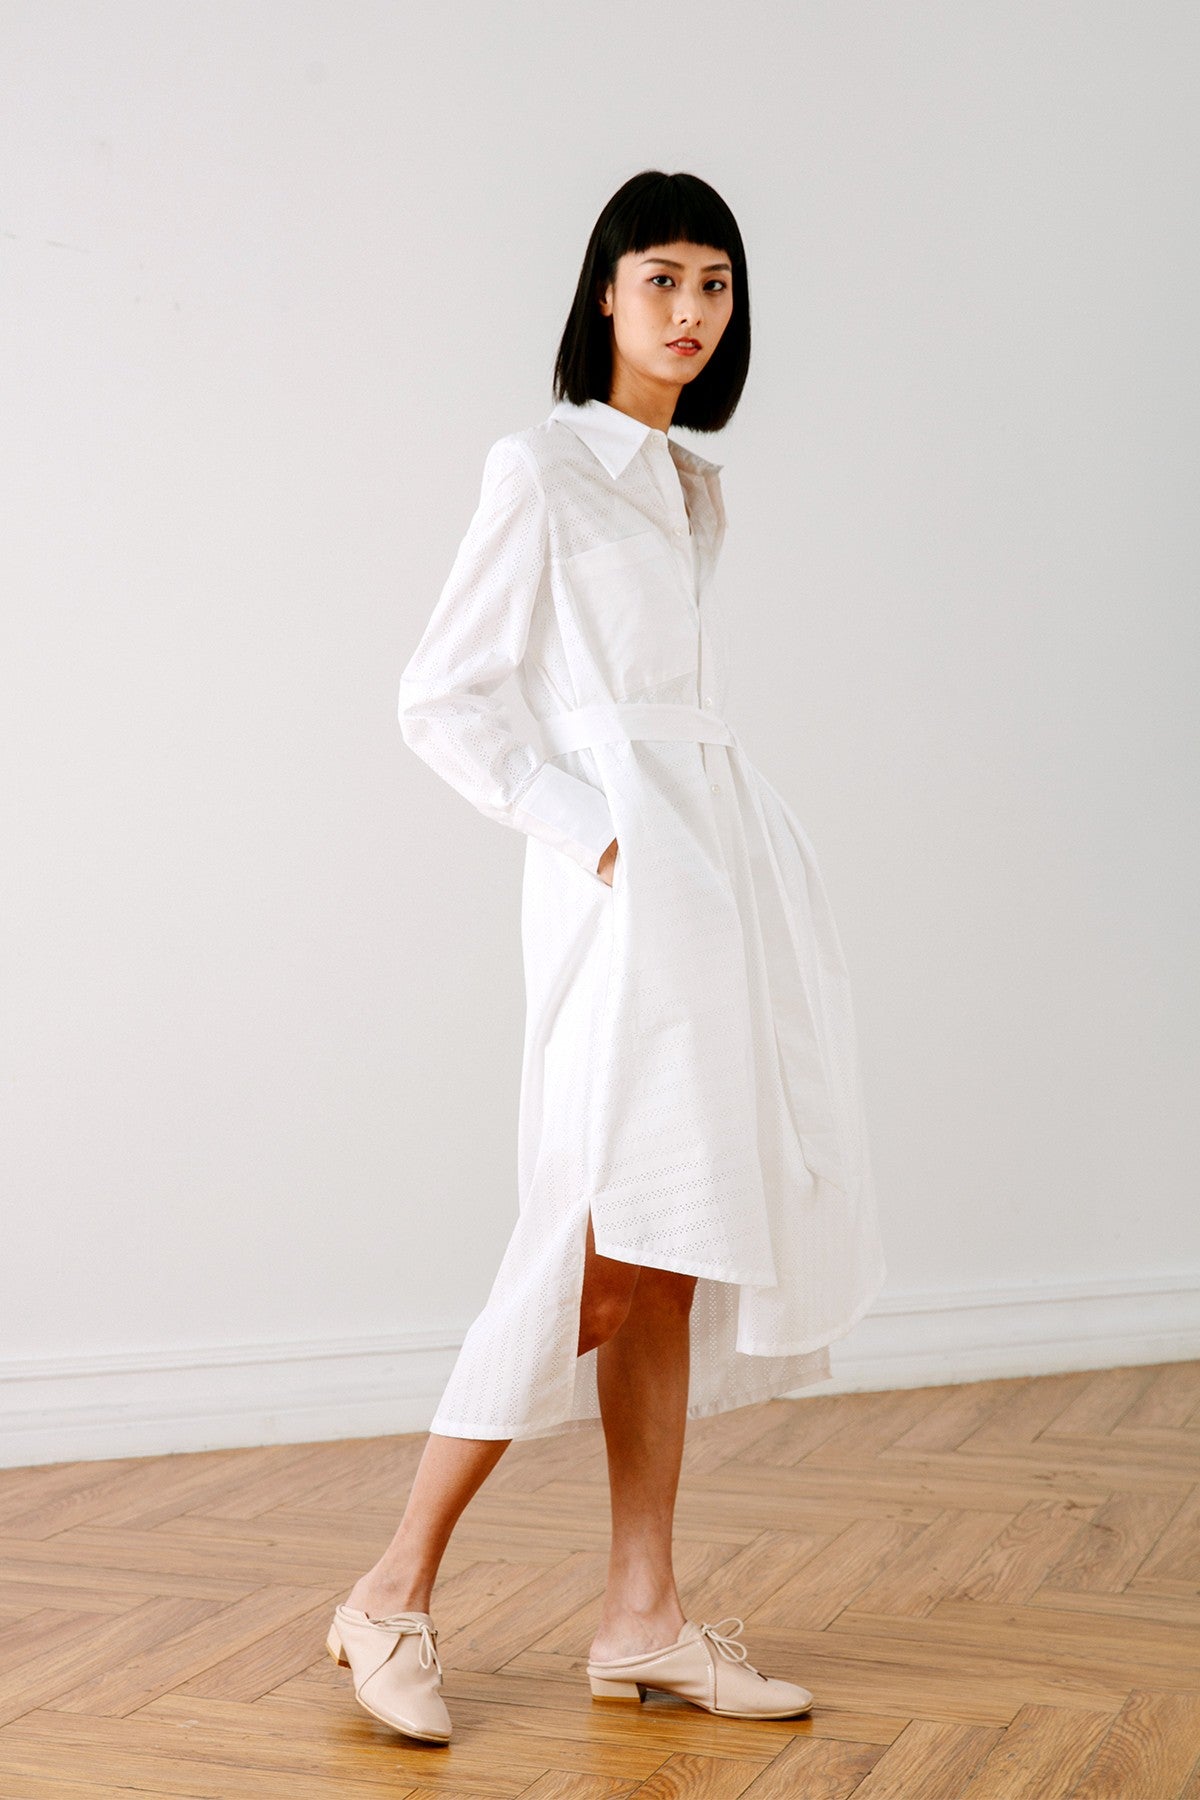 SKYE San Francisco SF California shop ethical sustainable modern chic minimalist luxury clothing women fashion Olivia Shirt Dress white 6